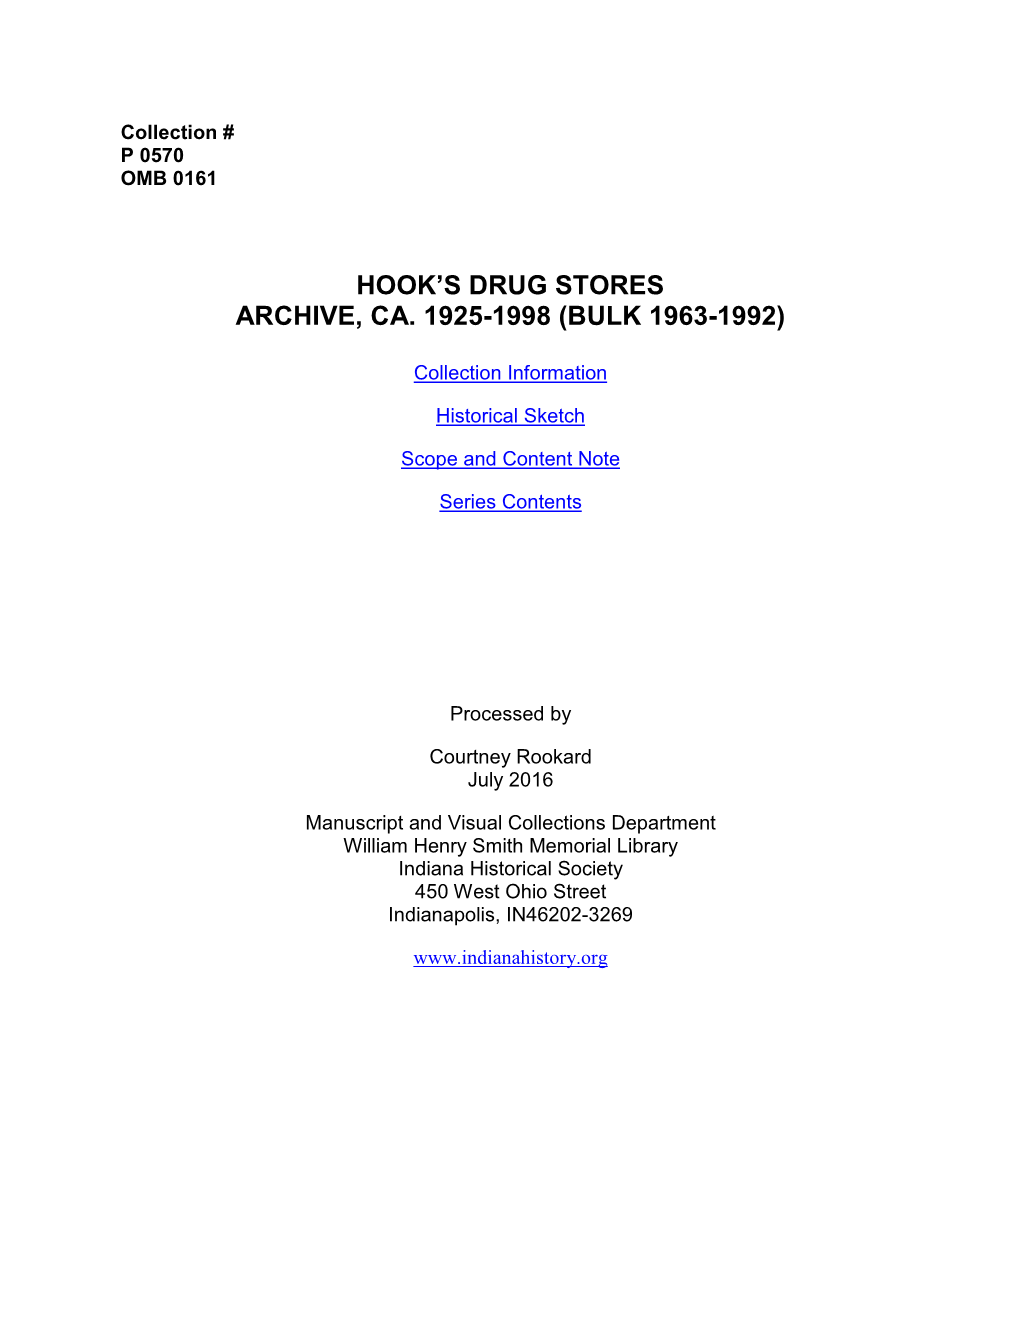 Hook's Drug Stores Archive